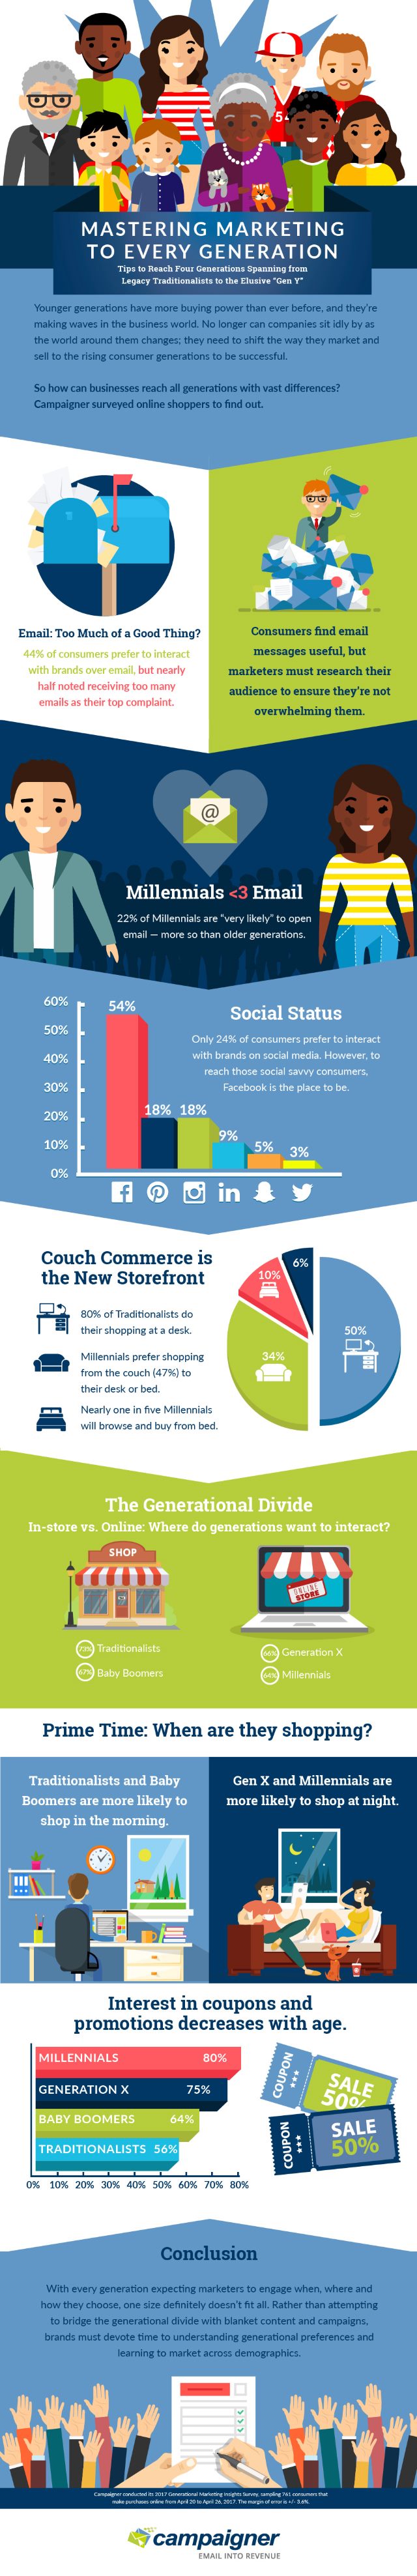 Campaigner marketing infographic